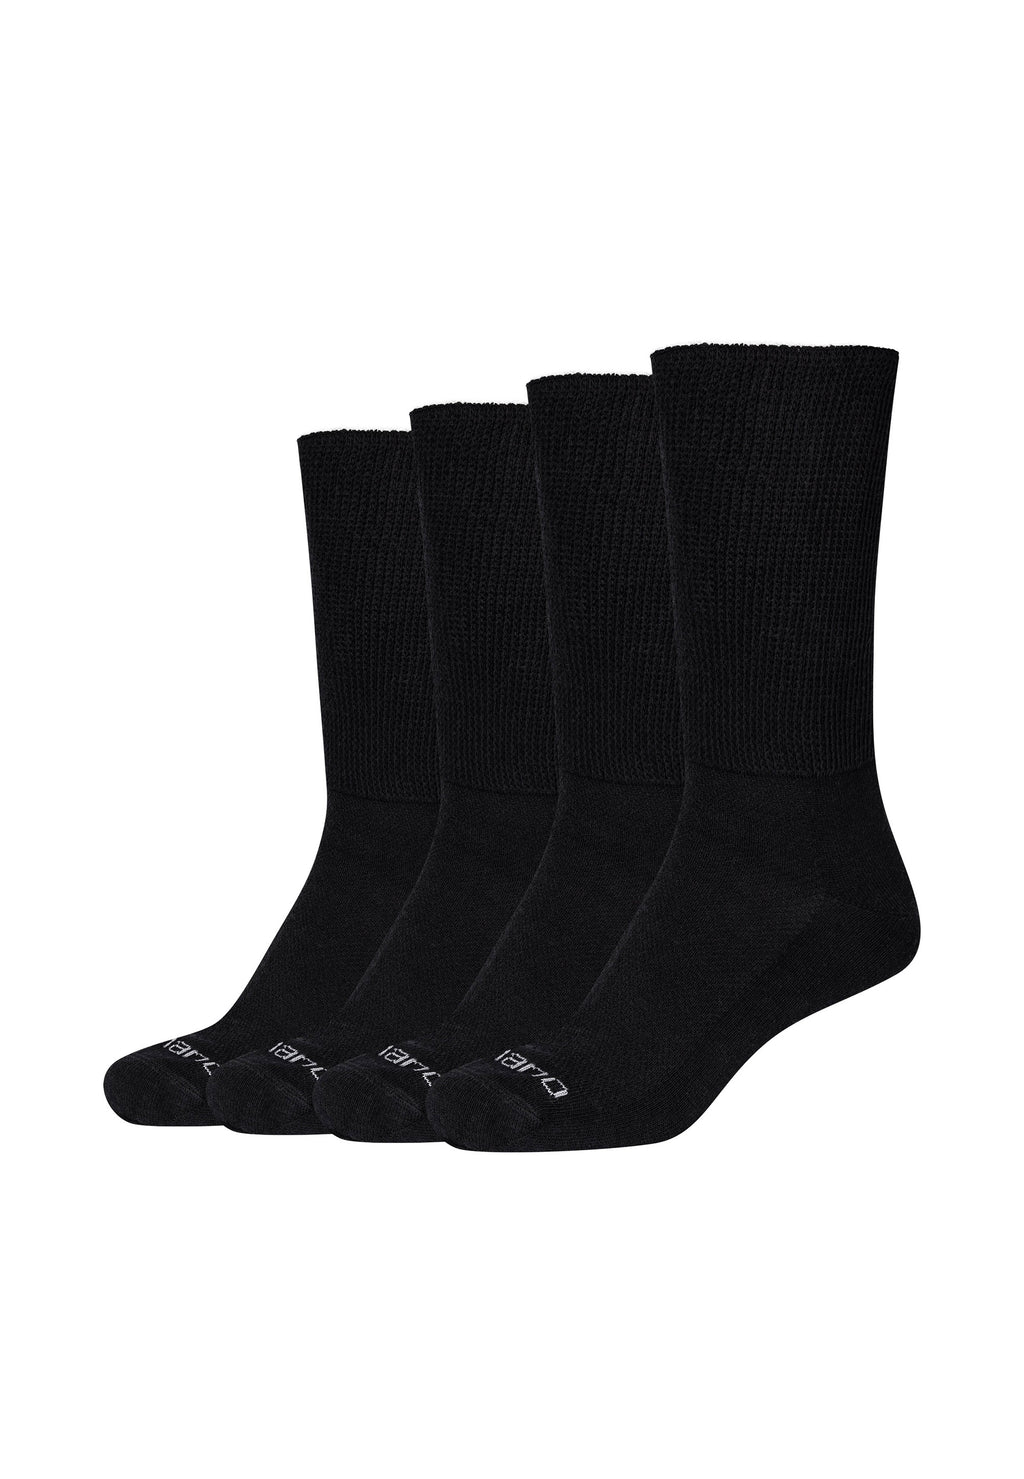 Diabetiker ONSKINERY – 4er Pack Socken Plus Comfort